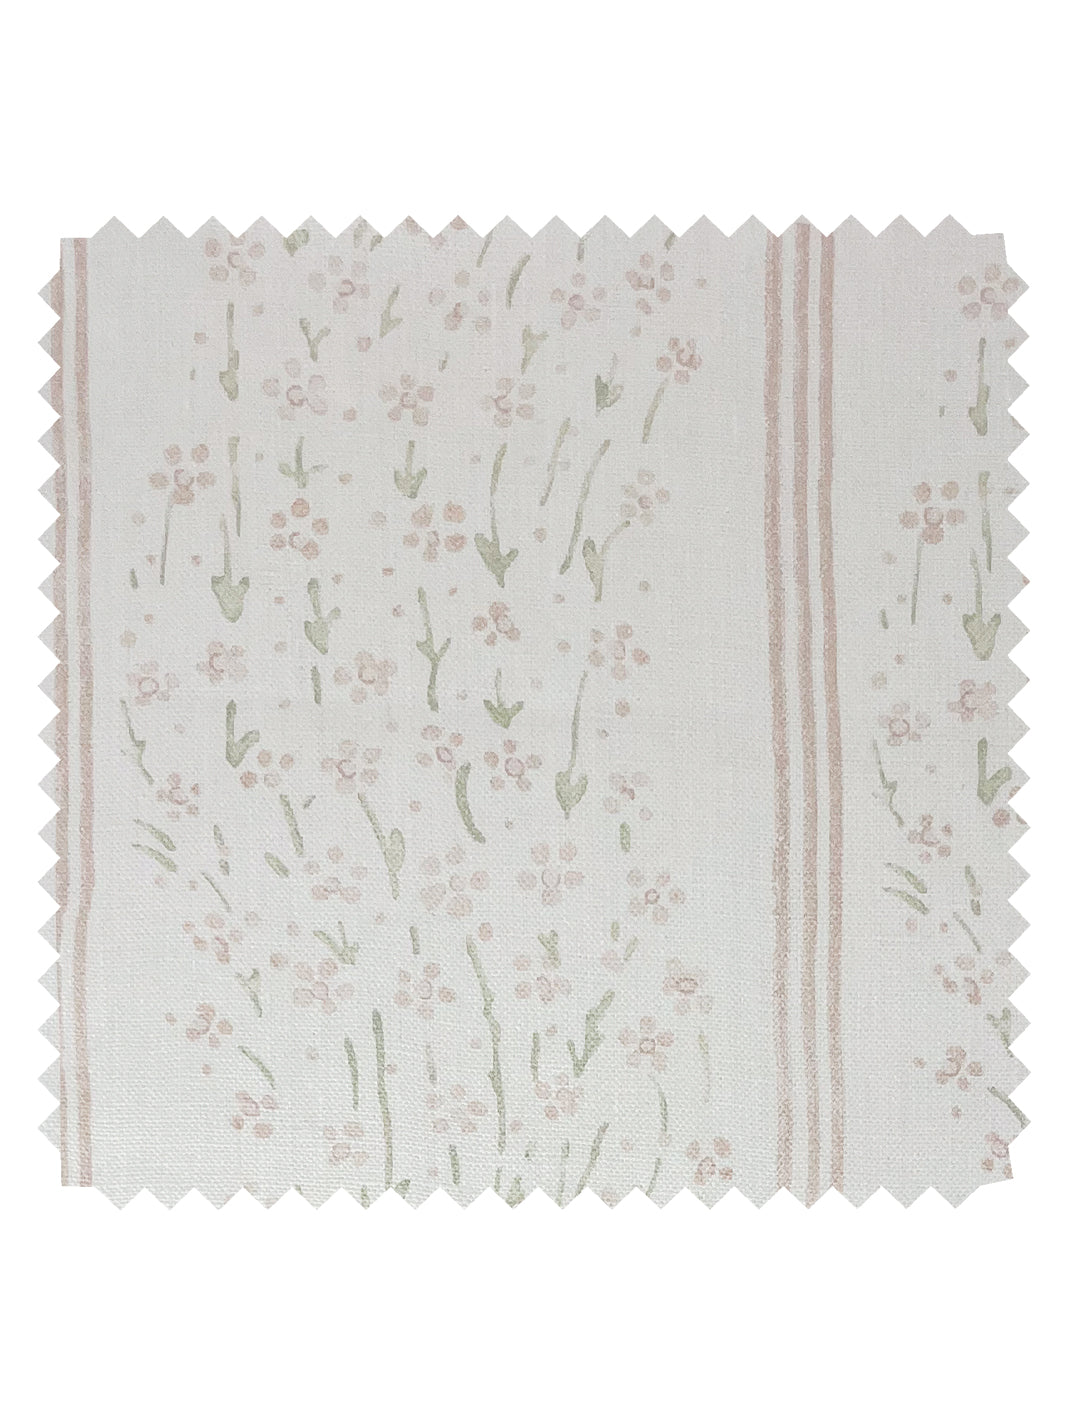 &#39;Hillhouse Floral Disty Wave Stripe&#39; Linen Fabric - Pink Green